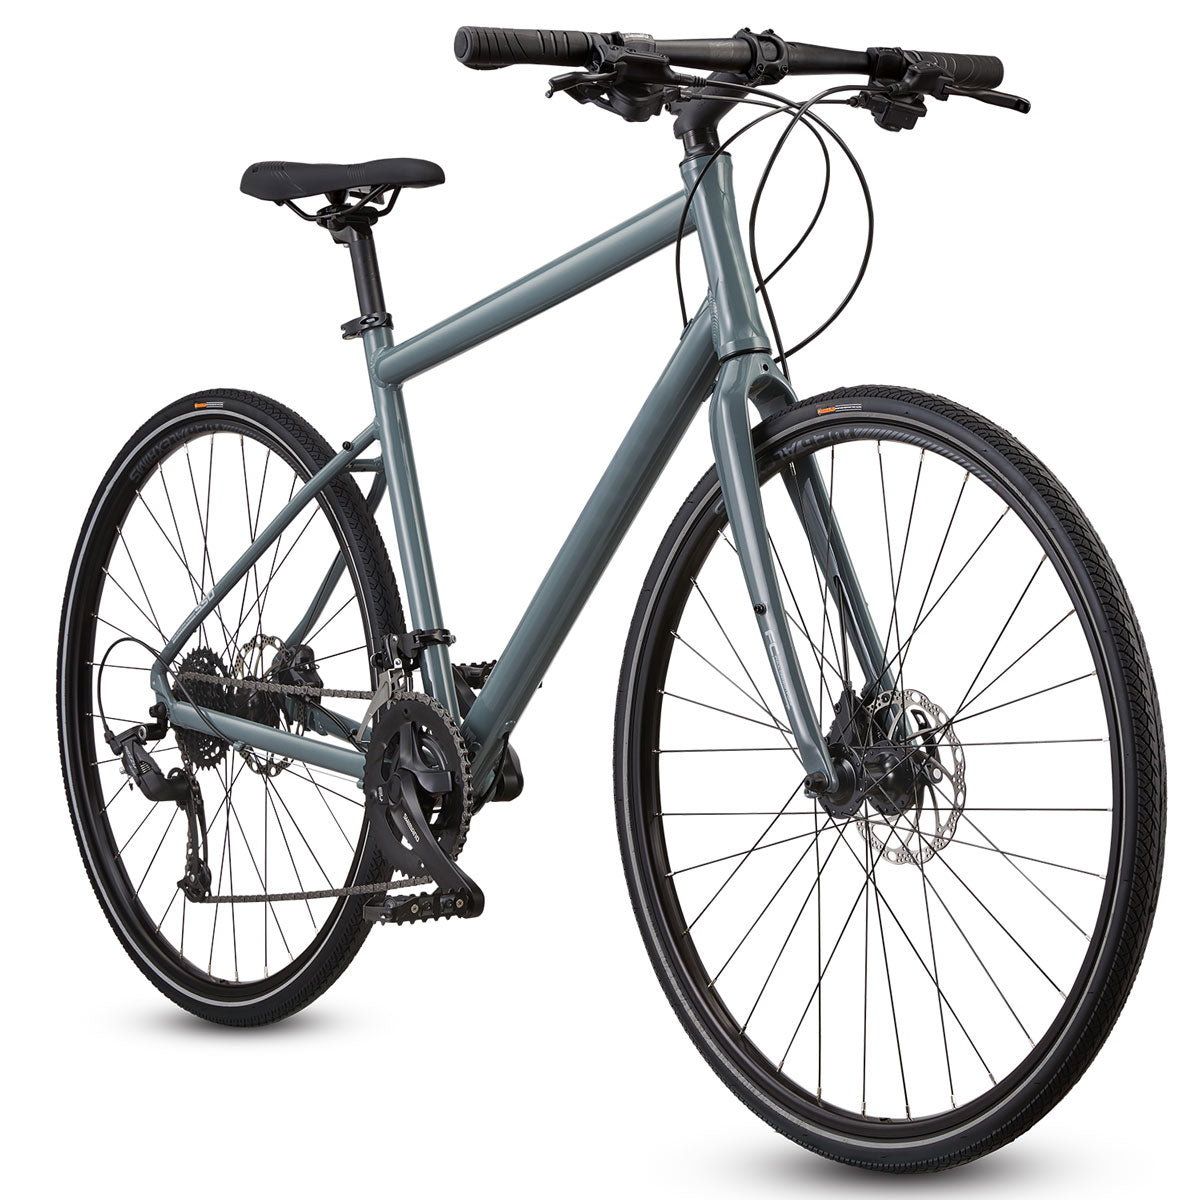 Vivace A1 Carbon-F Hybrid Bike - Grey (Large, 19")